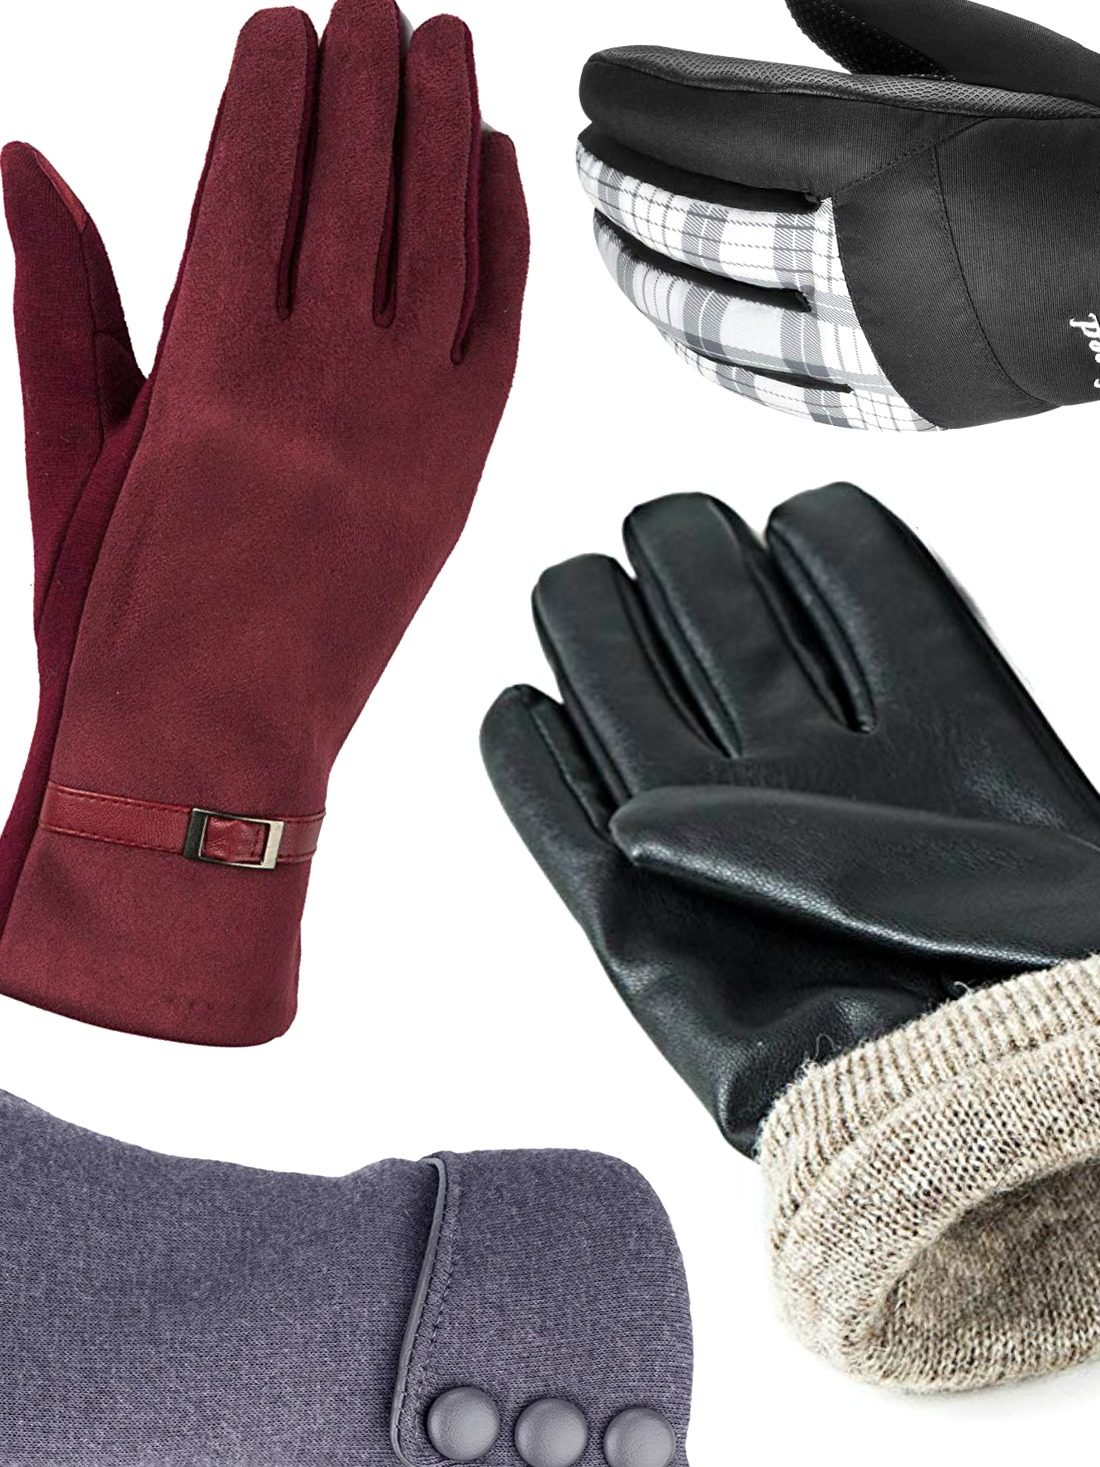 warmest winter gloves for ladies